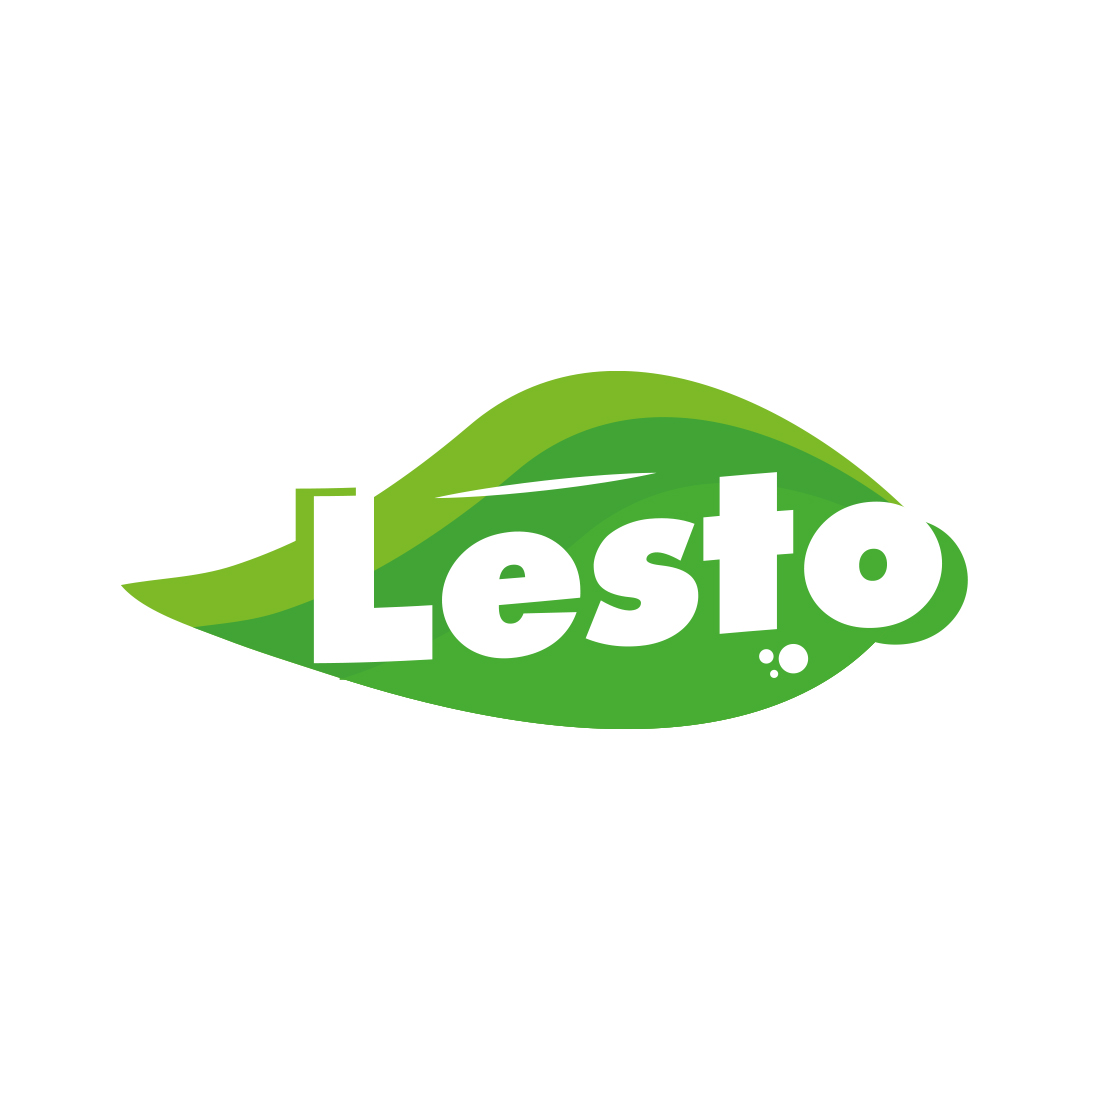 Lesto ( Typography ) logo design Txt is easily editable cover image.